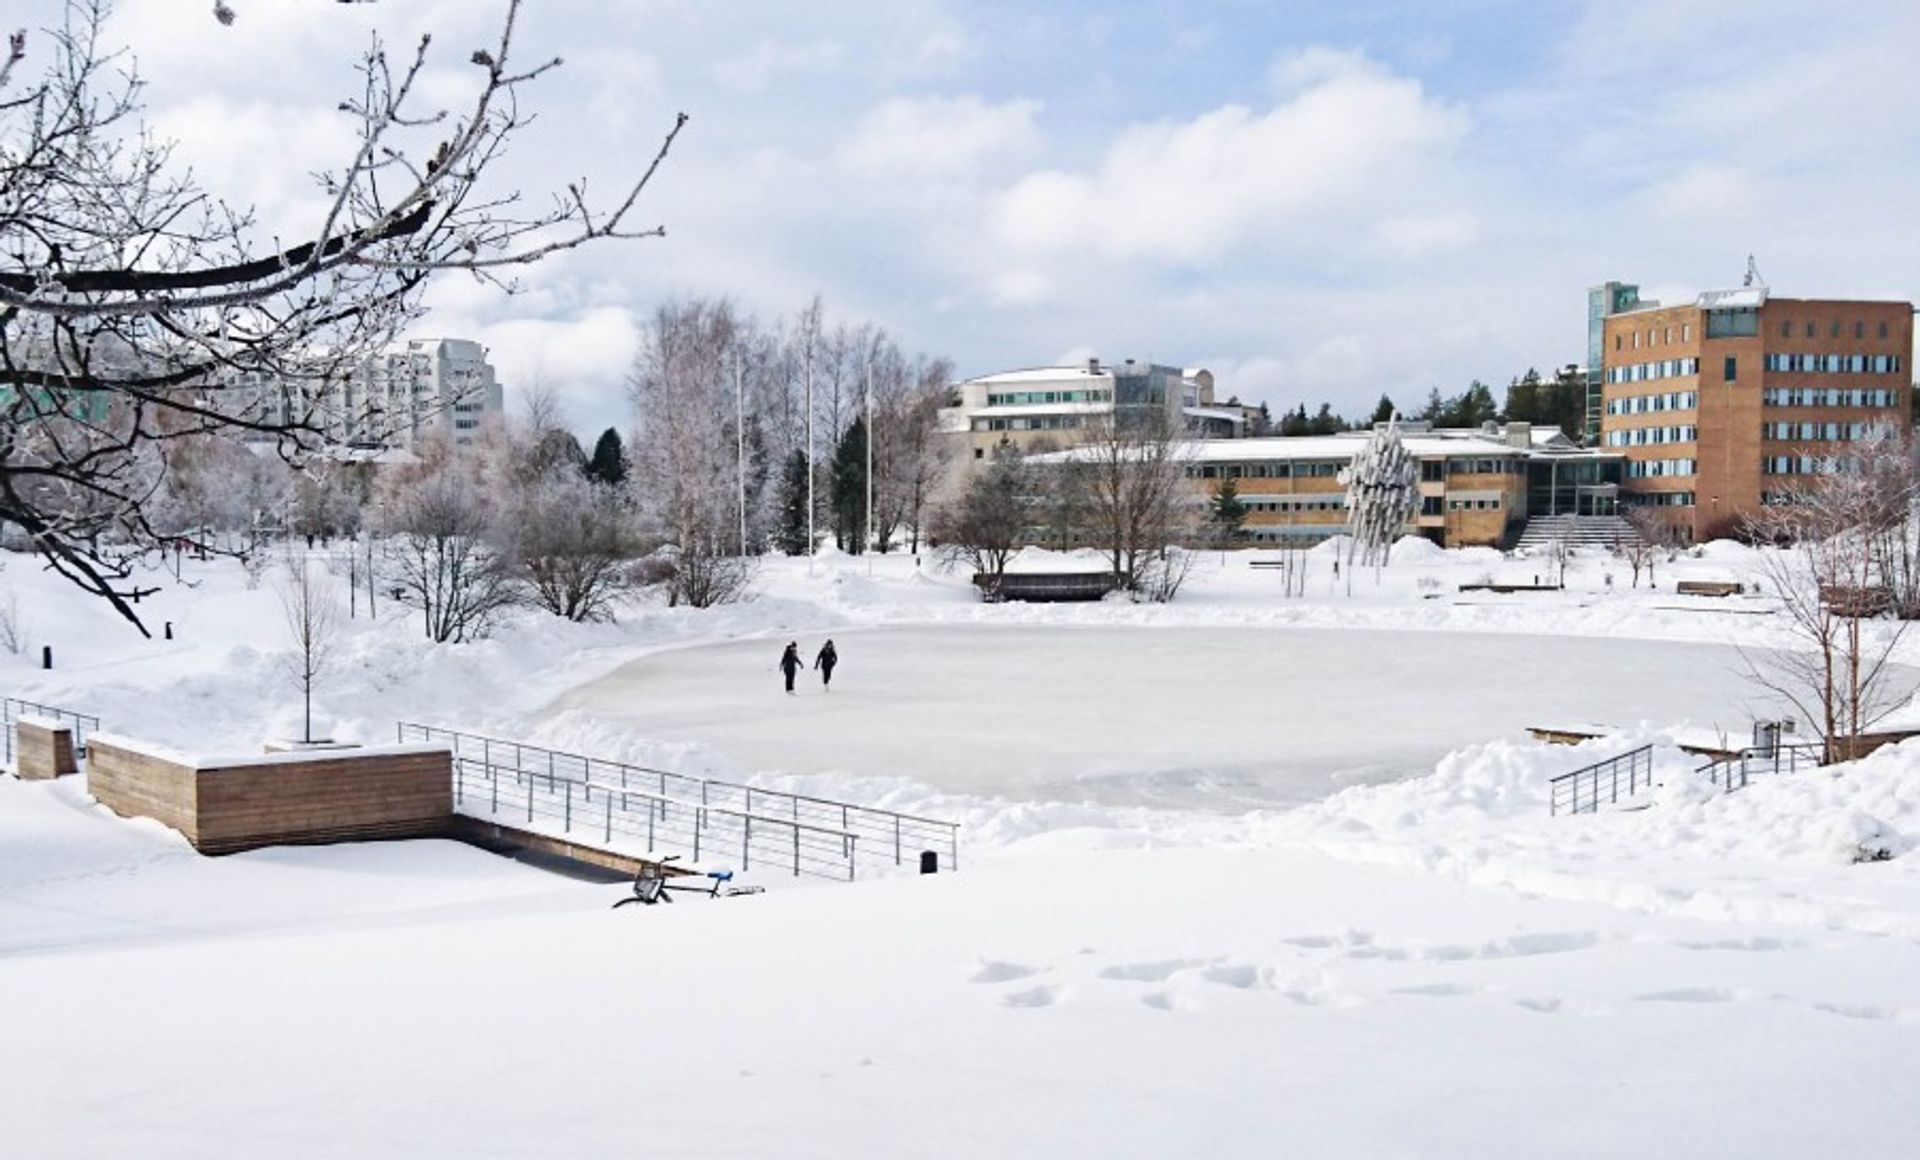 Ice skating in front of Umeå University